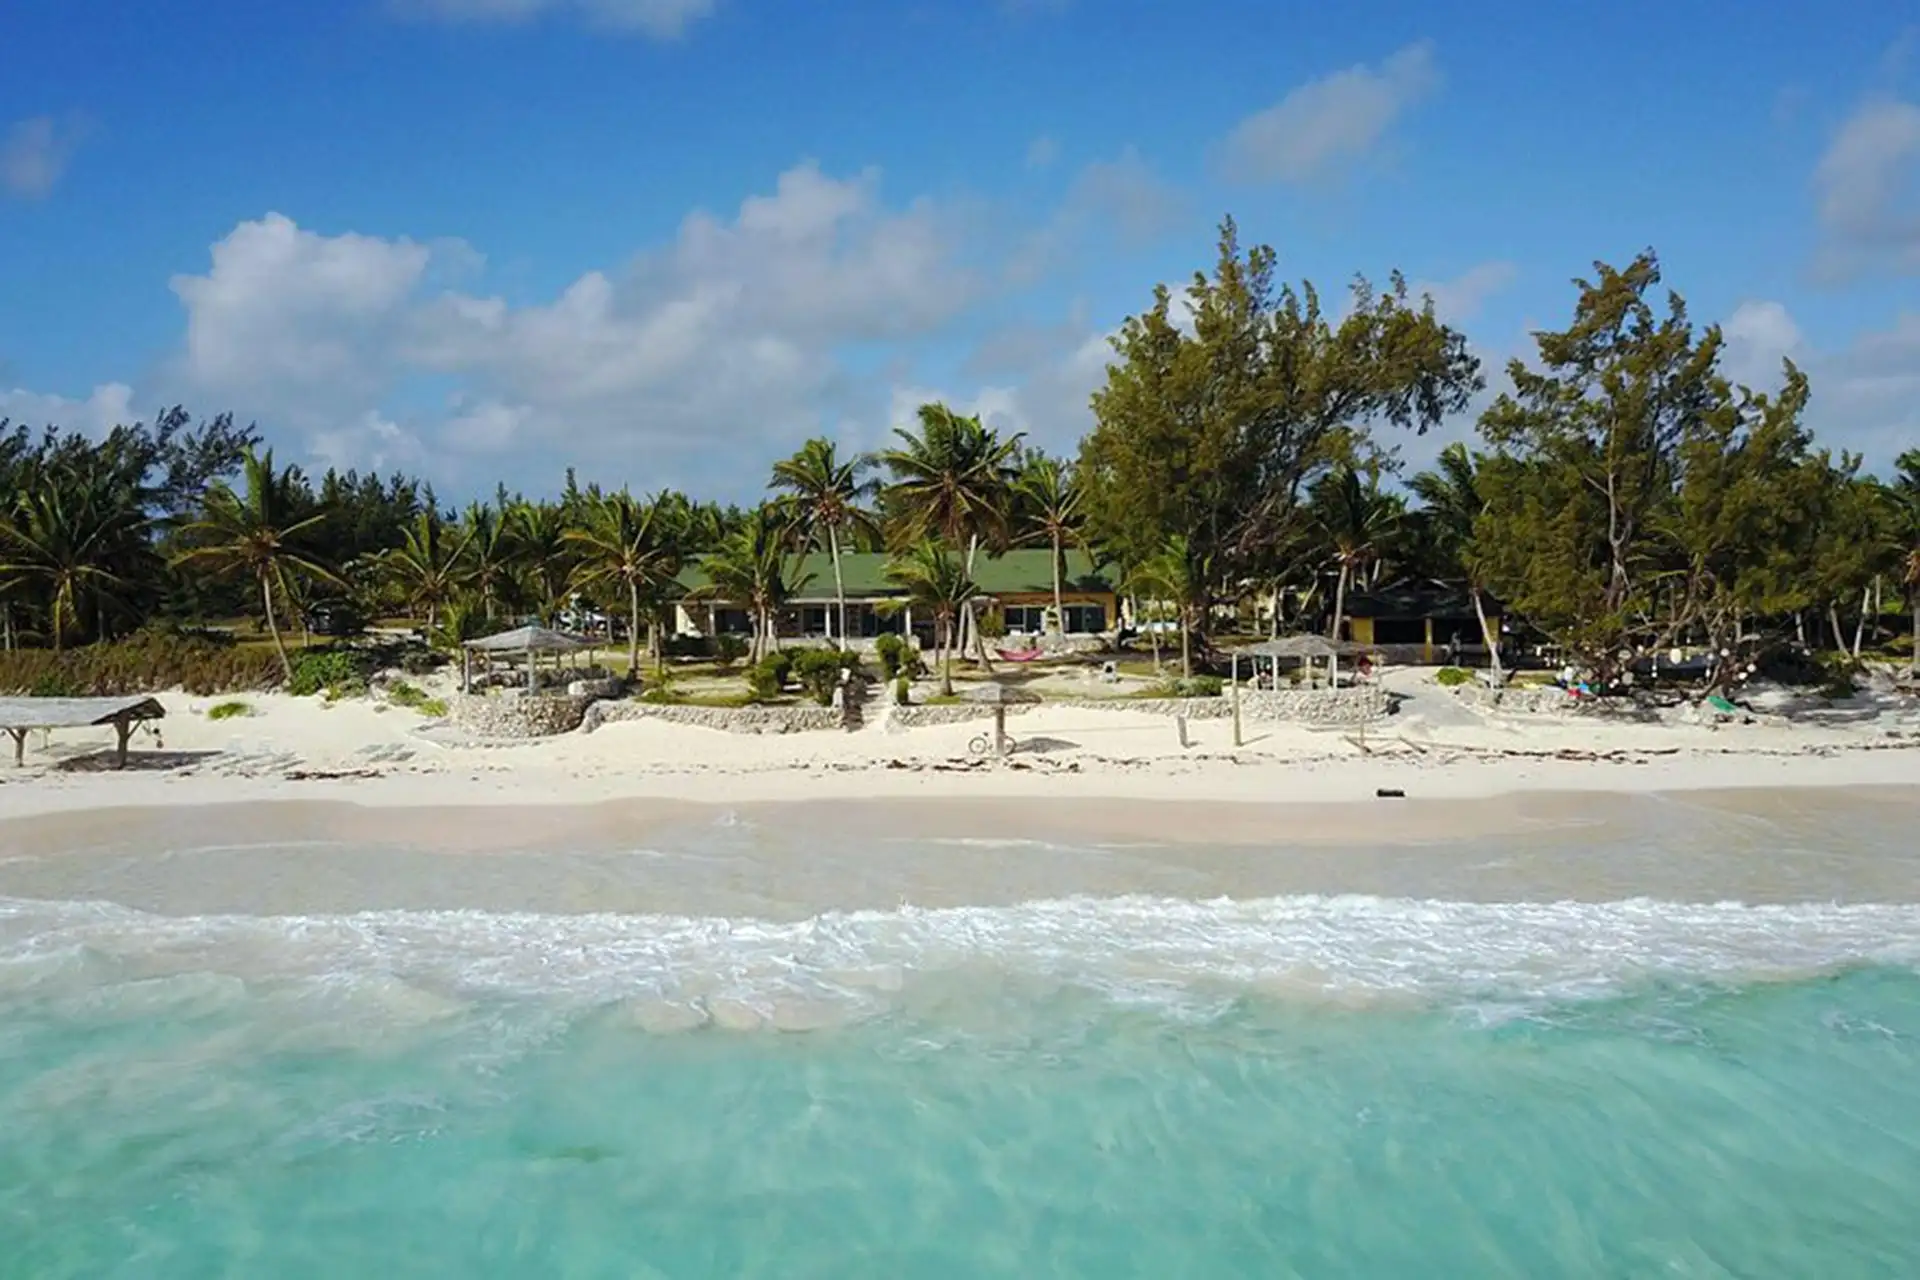 Greenwood Beach Resort in the Bahamas